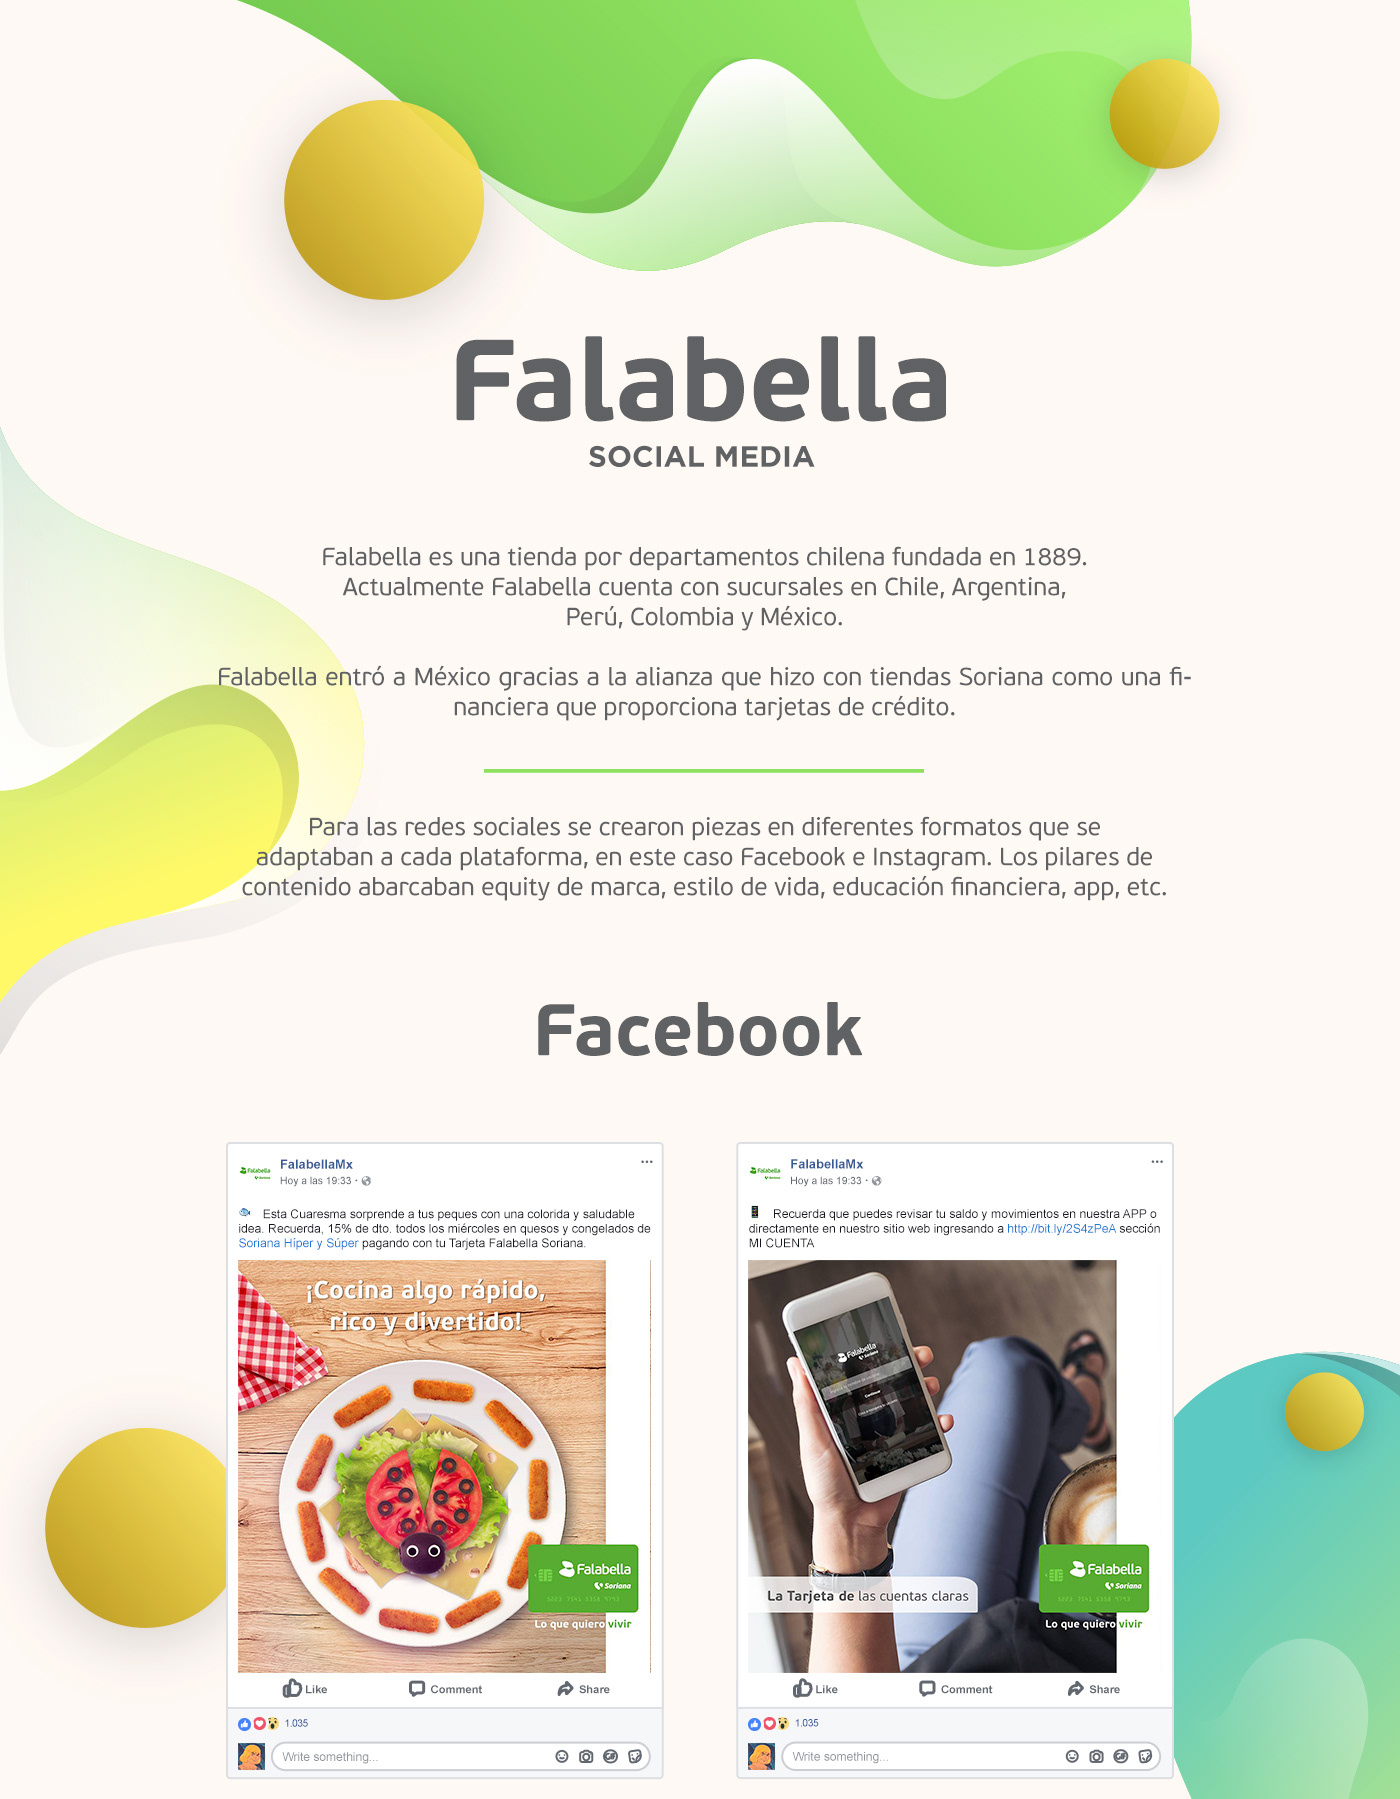 FalabellaMx diseño redes sociales social media cupcake tarjeta de crédito credit card Soriana sorianamx